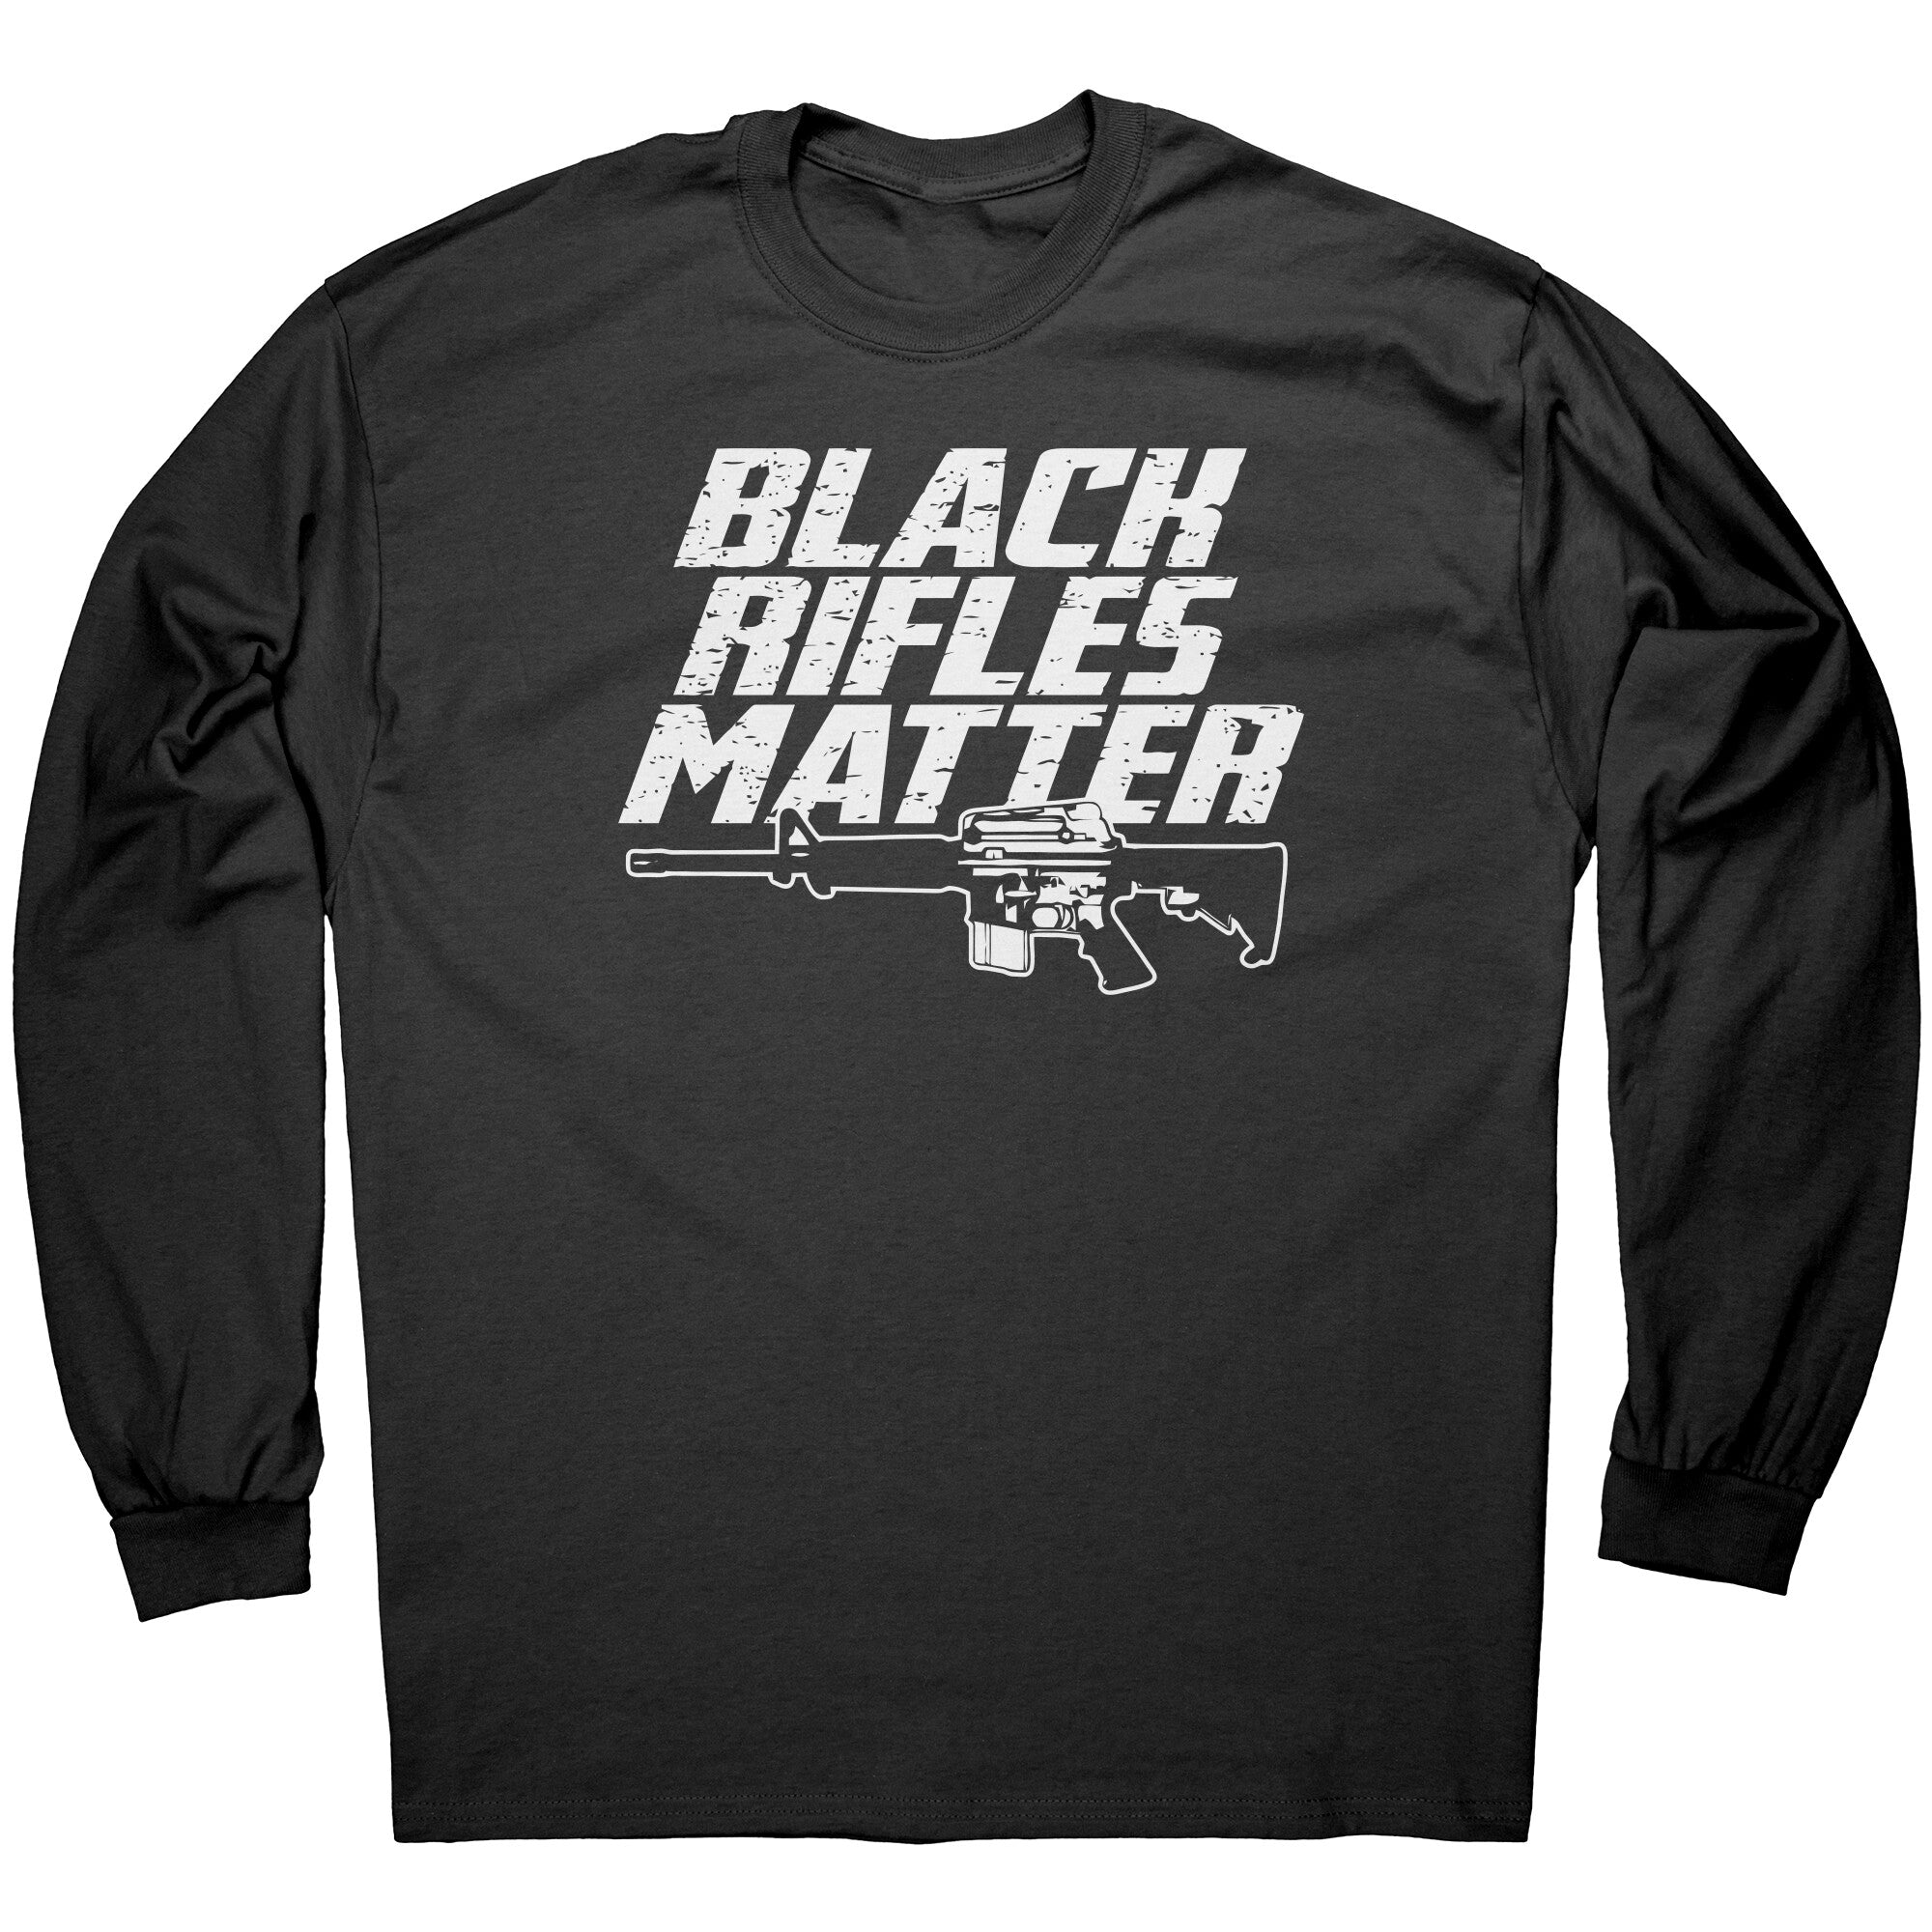 Black Rifles Matter -Apparel | Drunk America 